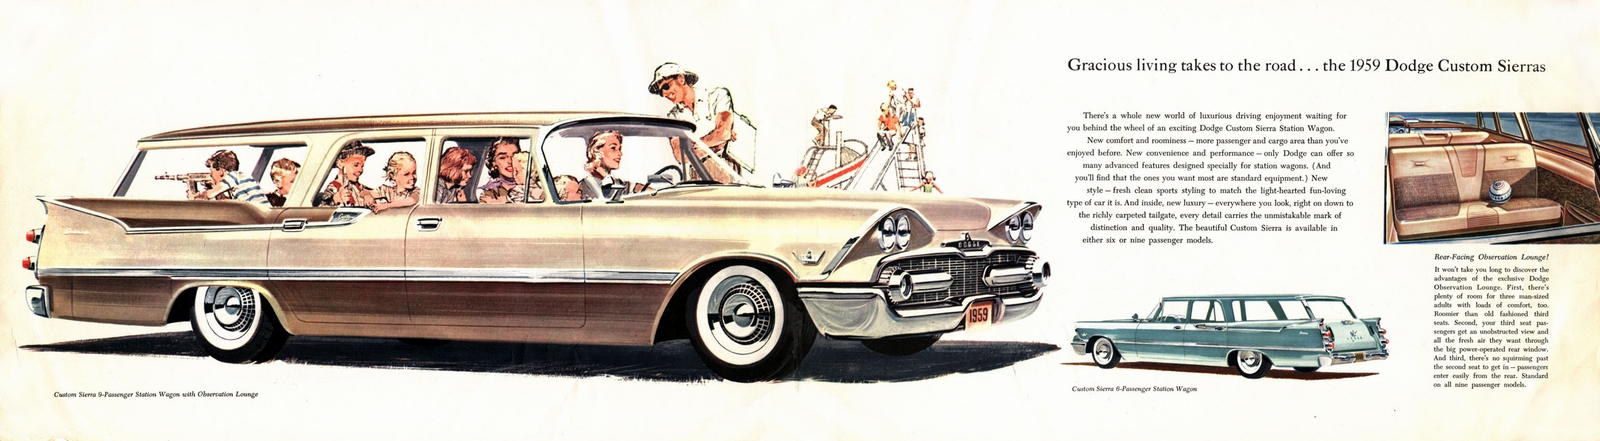 n_1959 Dodge Sierra Wagons-02-03.jpg